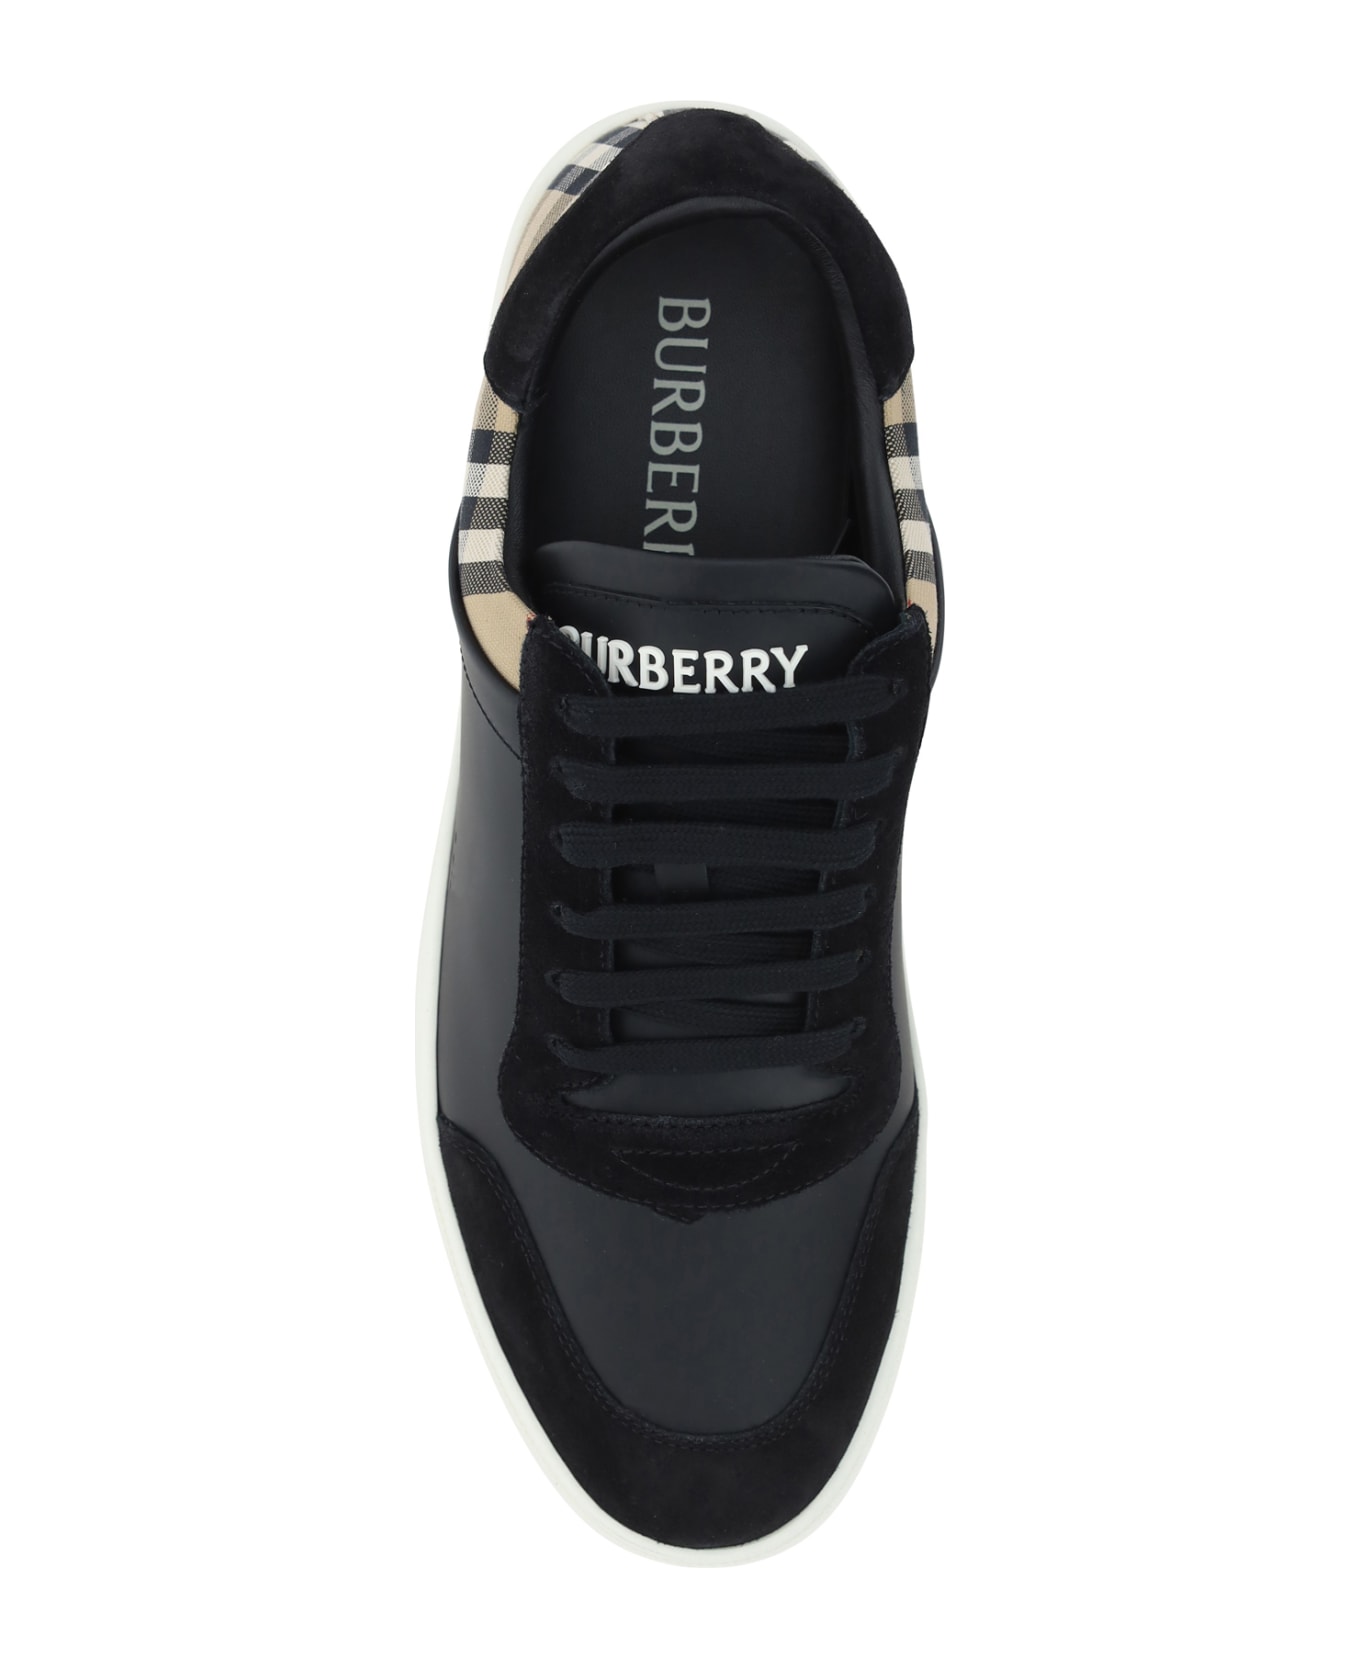 Burberry Sneakers - Black